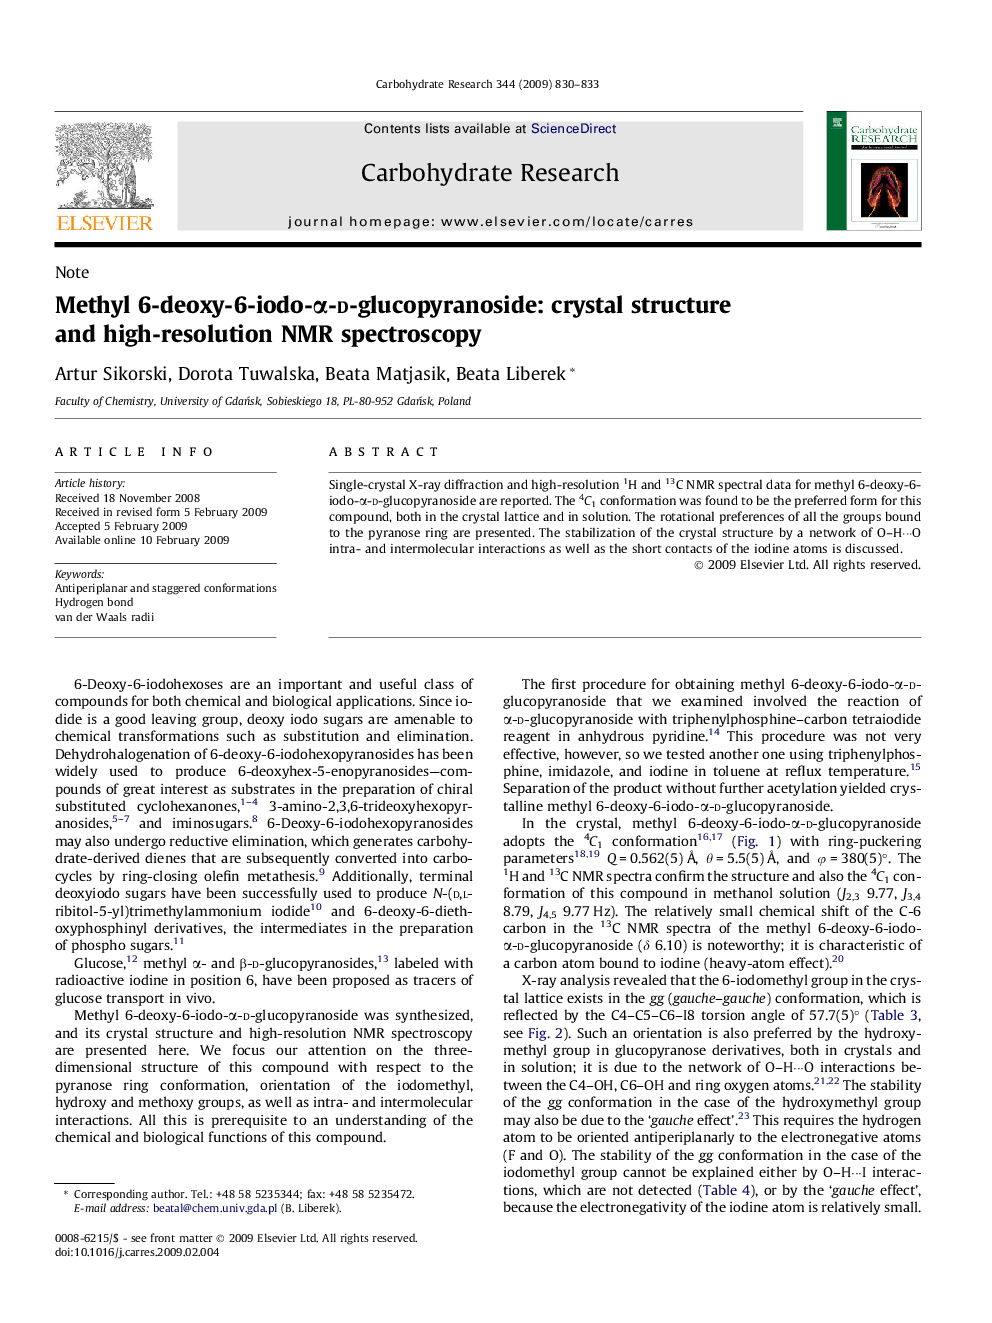 Methyl 6-deoxy-6-iodo-Î±-d-glucopyranoside: crystal structure and high-resolution NMR spectroscopy